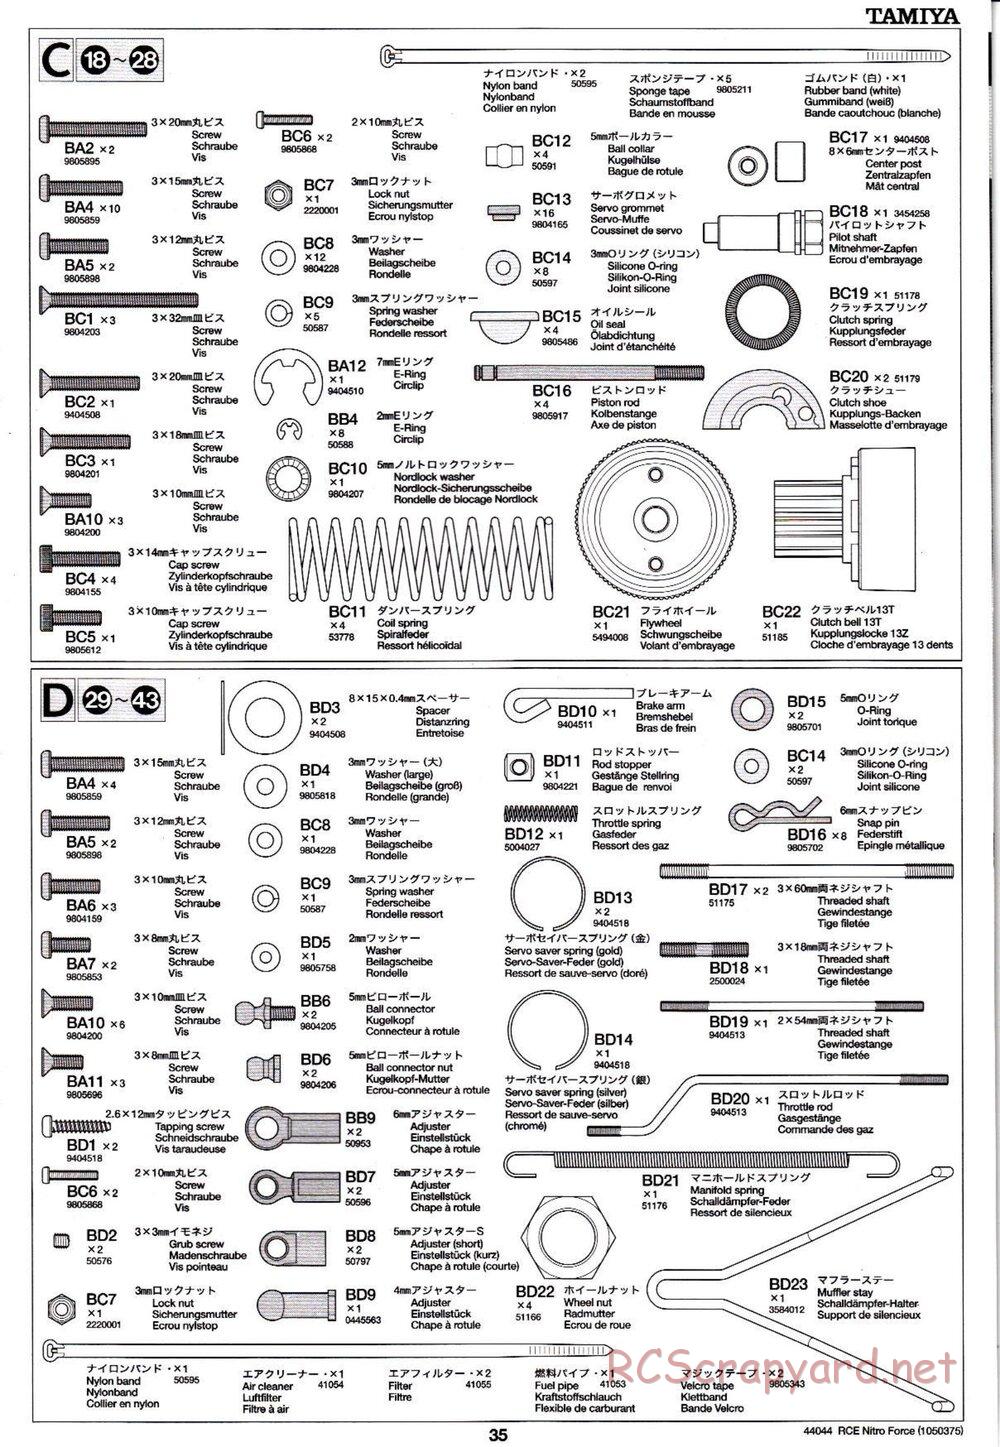 Tamiya - Nitro Force - NDF-01 Chassis - Manual - Page 35